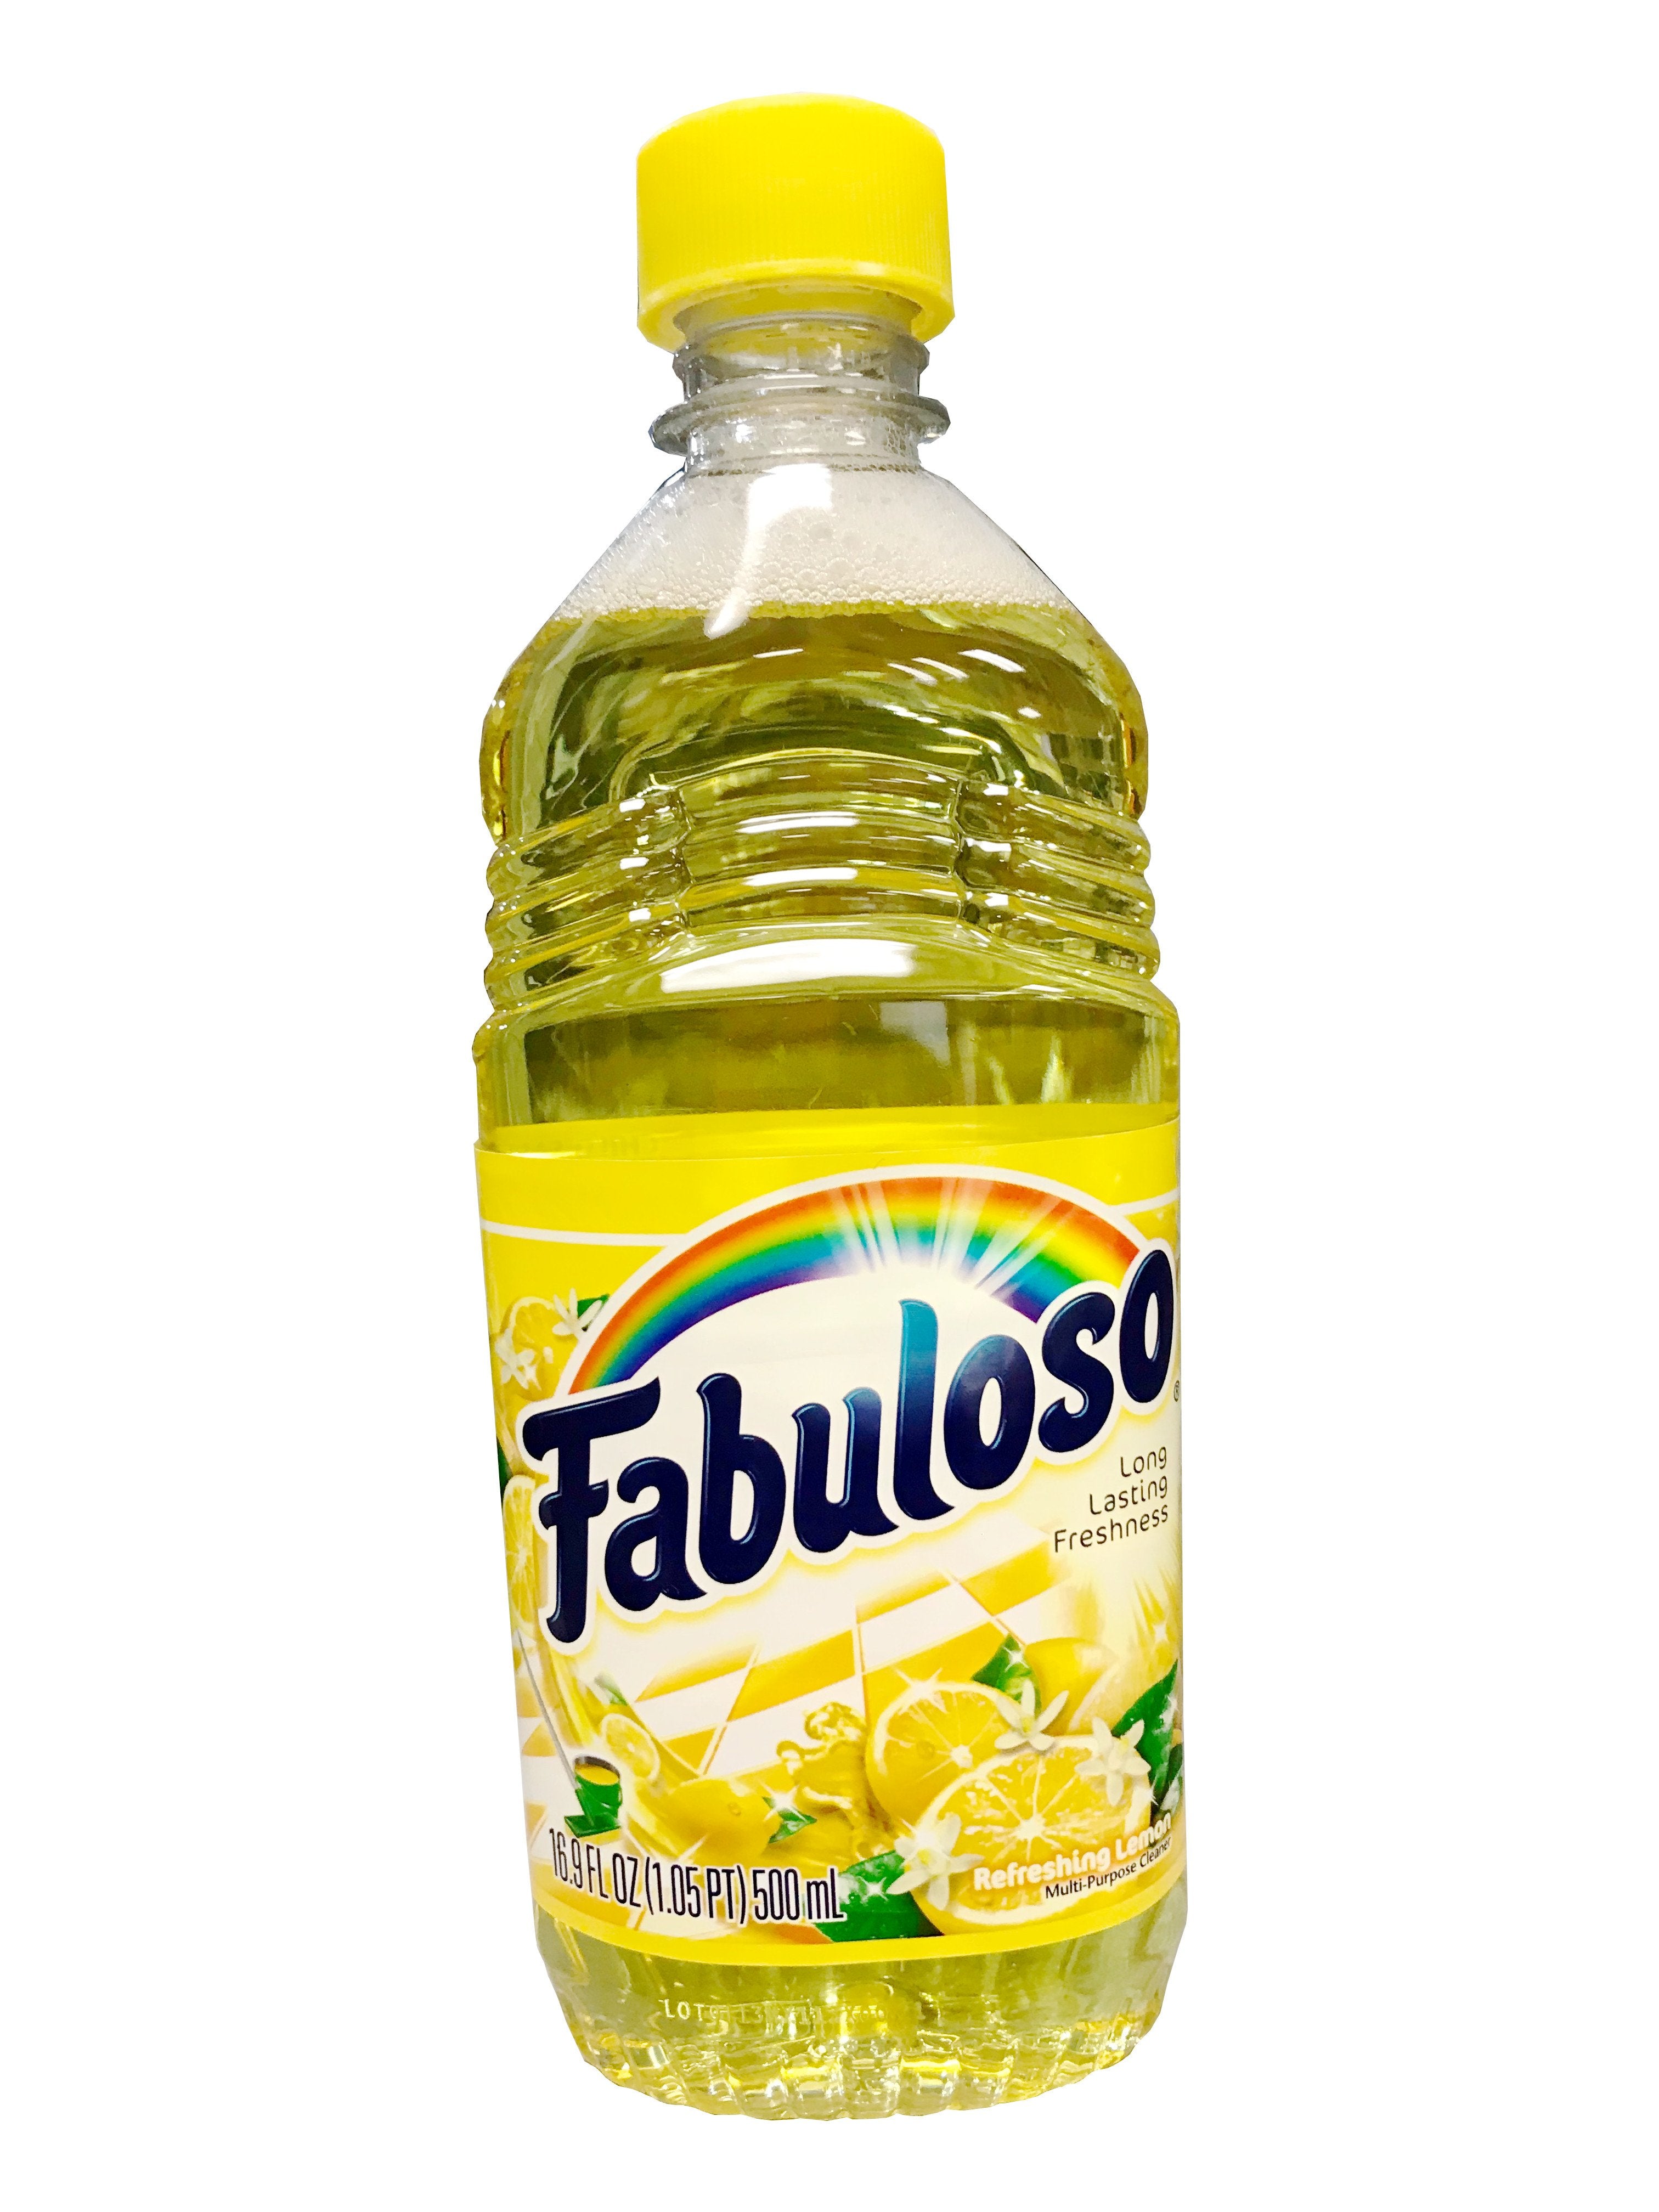 Fabuloso - Multi-Purpose Cleaner, Lemon Scent, 16.9 Fluid Ounce - Case of 24